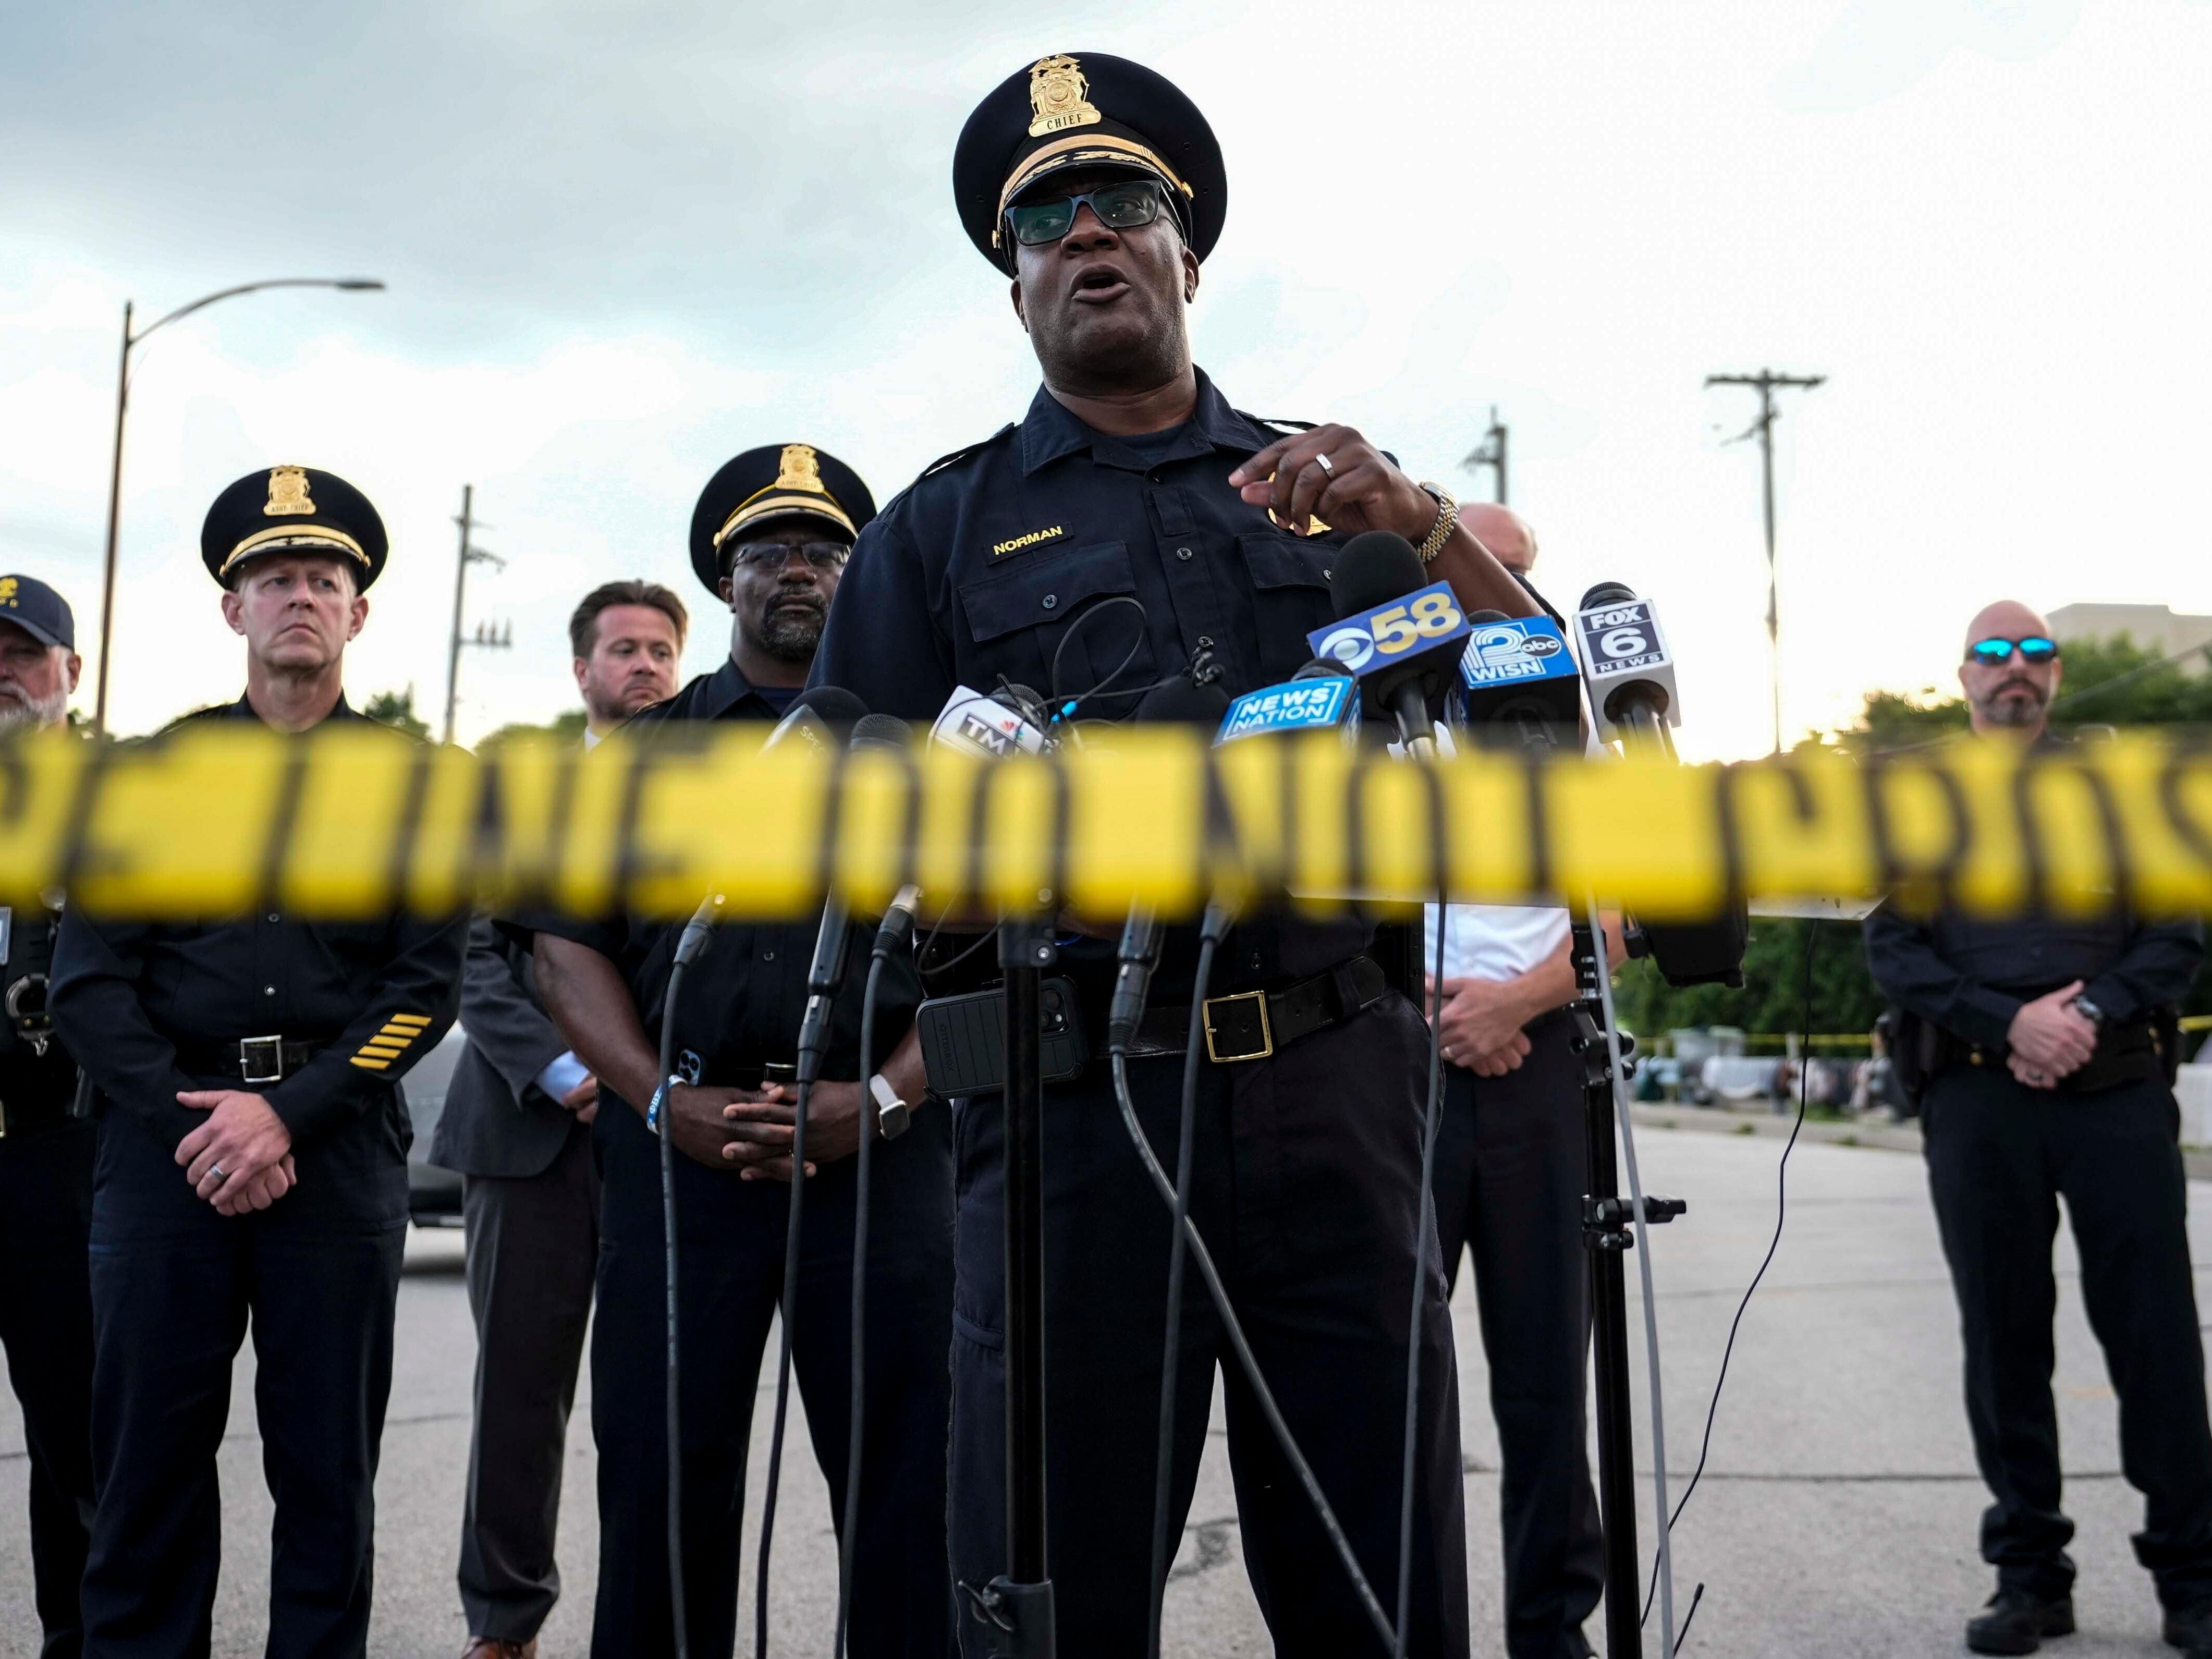 Interstate police shoot knife-wielding man near Republican convention